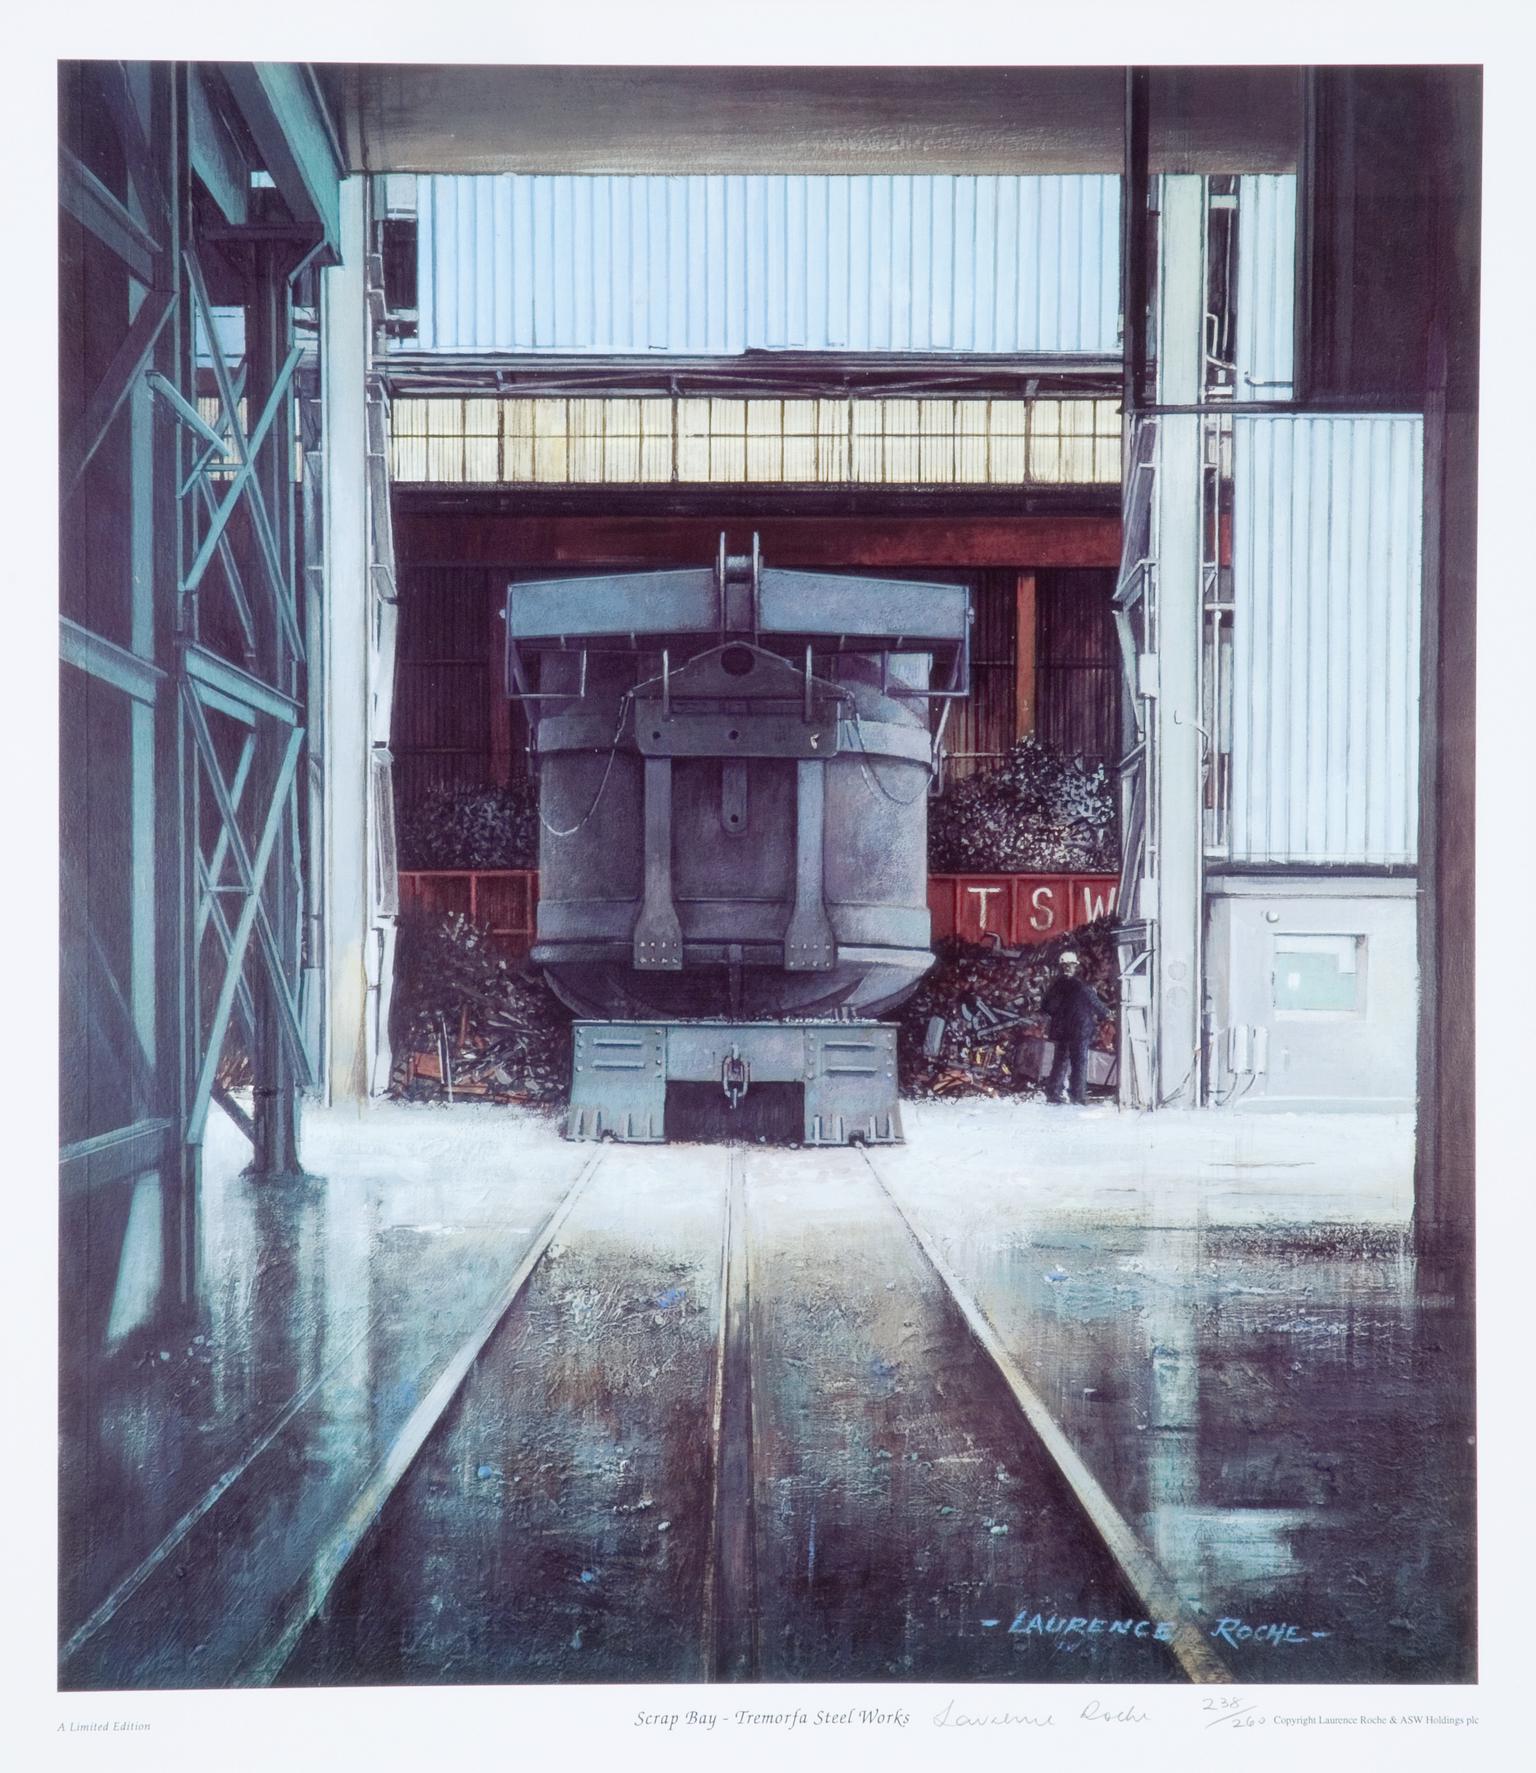 Scrap Bay - Tremorfa Steel Works (print)